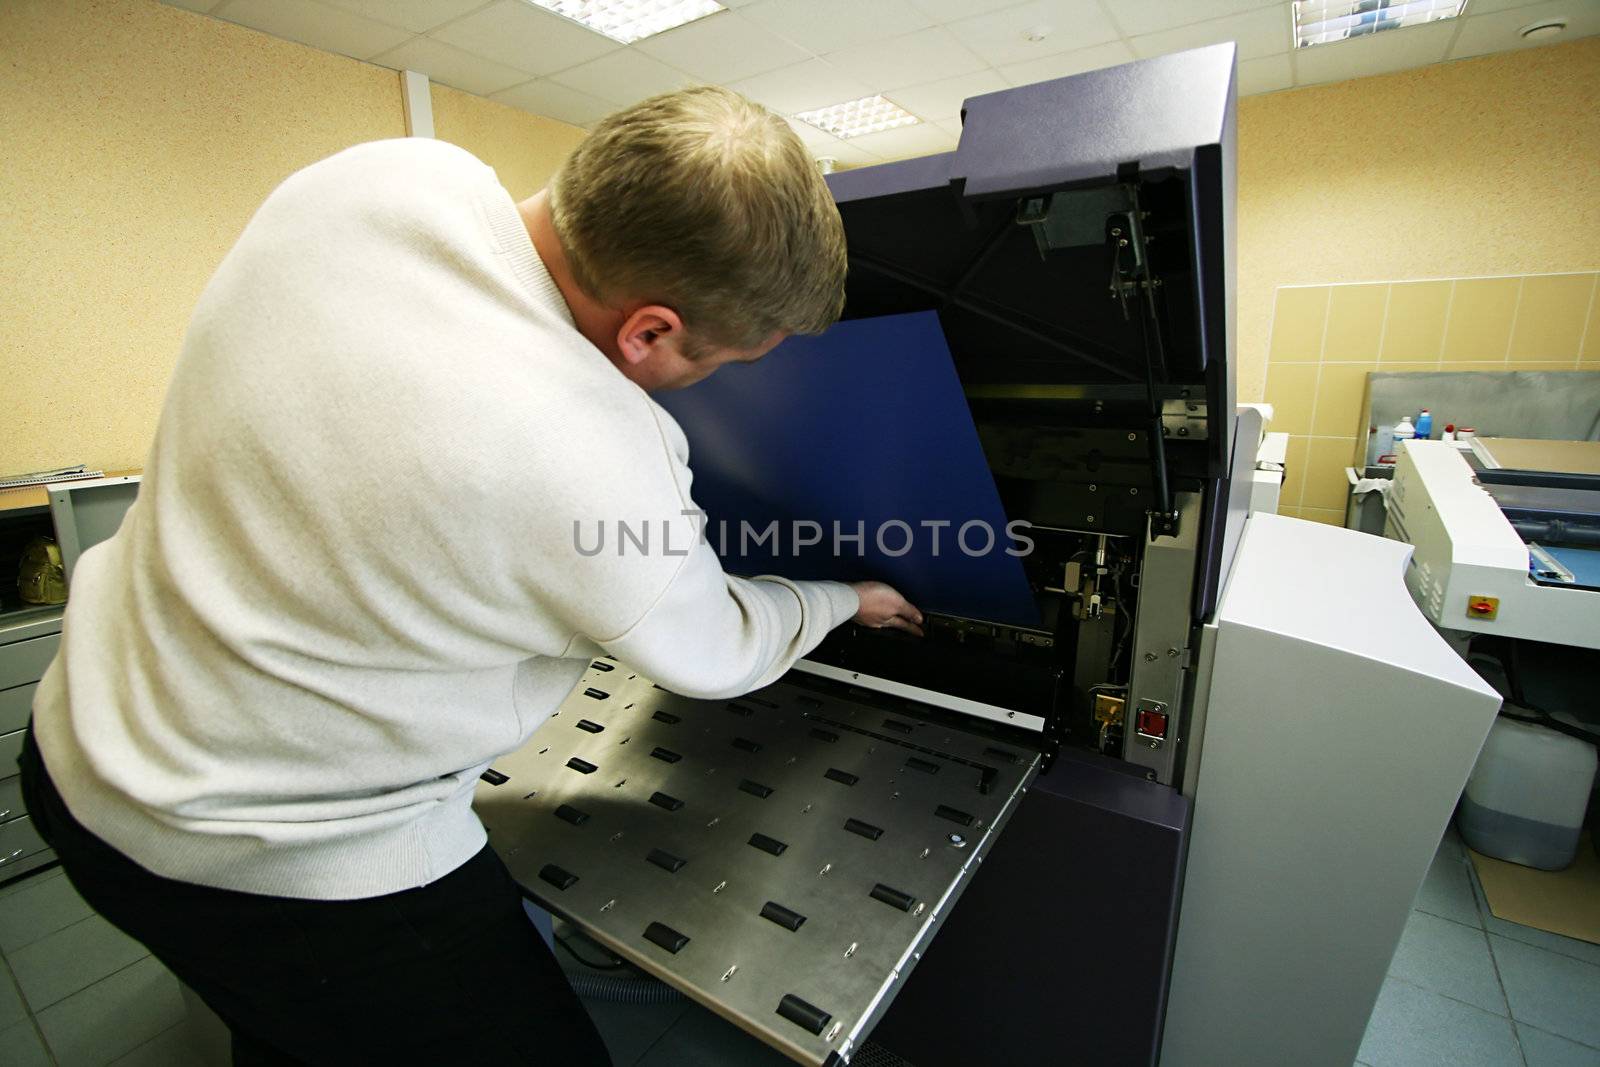 phototypesetting equipment by terex